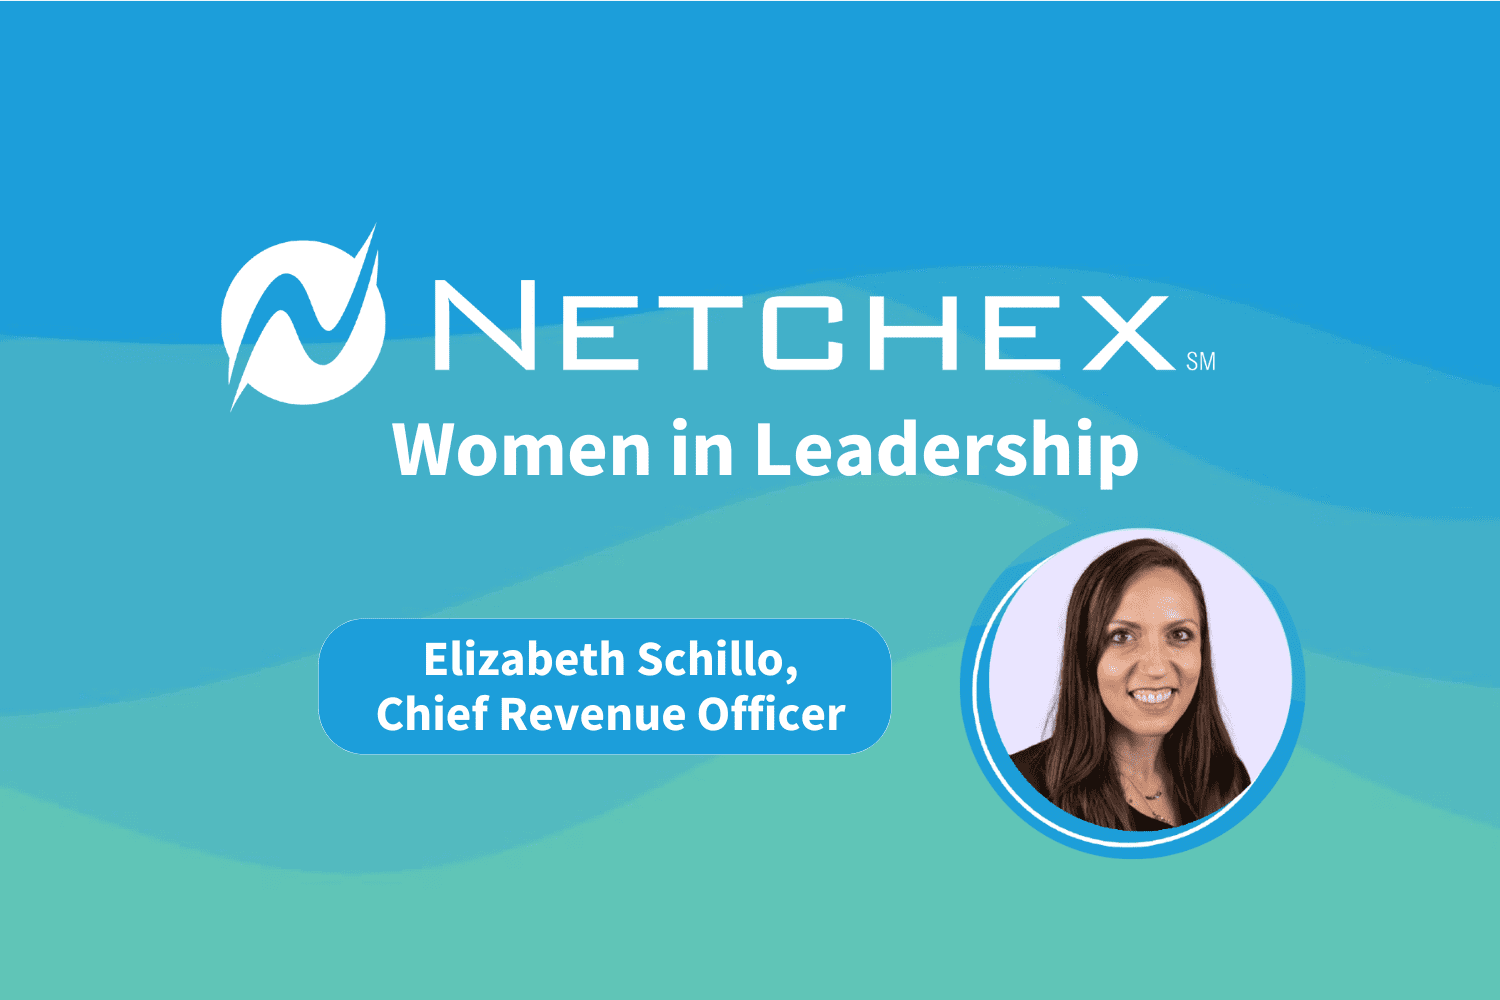 Netchex Women in Leadership - Elizabeth Schillo